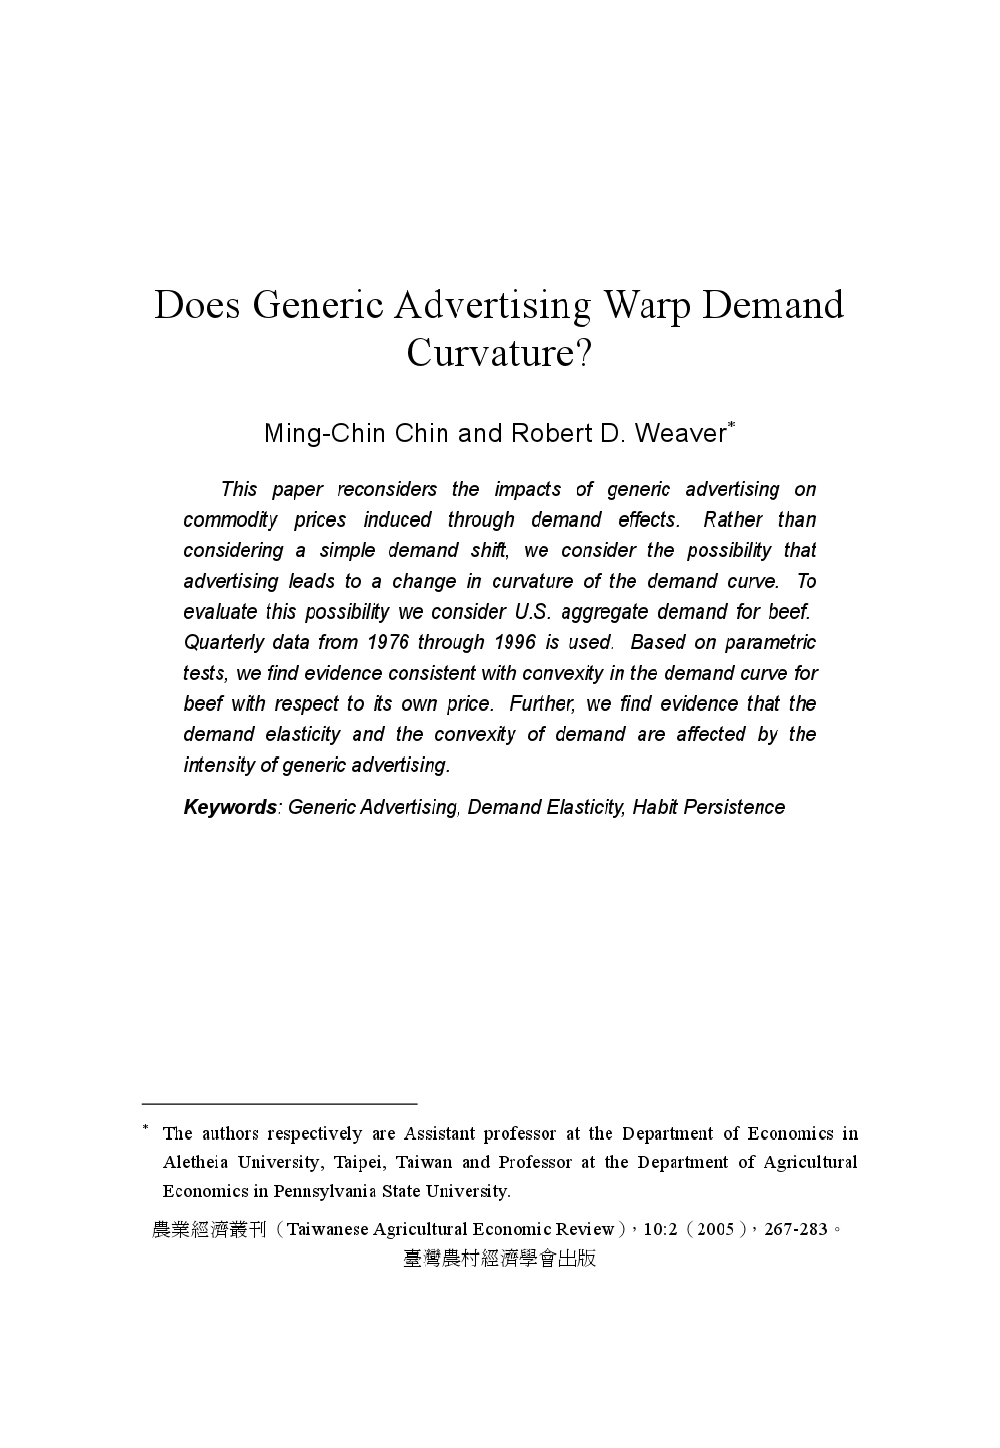 Does_Generic_Advertising_Warp_Demand_Curvature.jpg